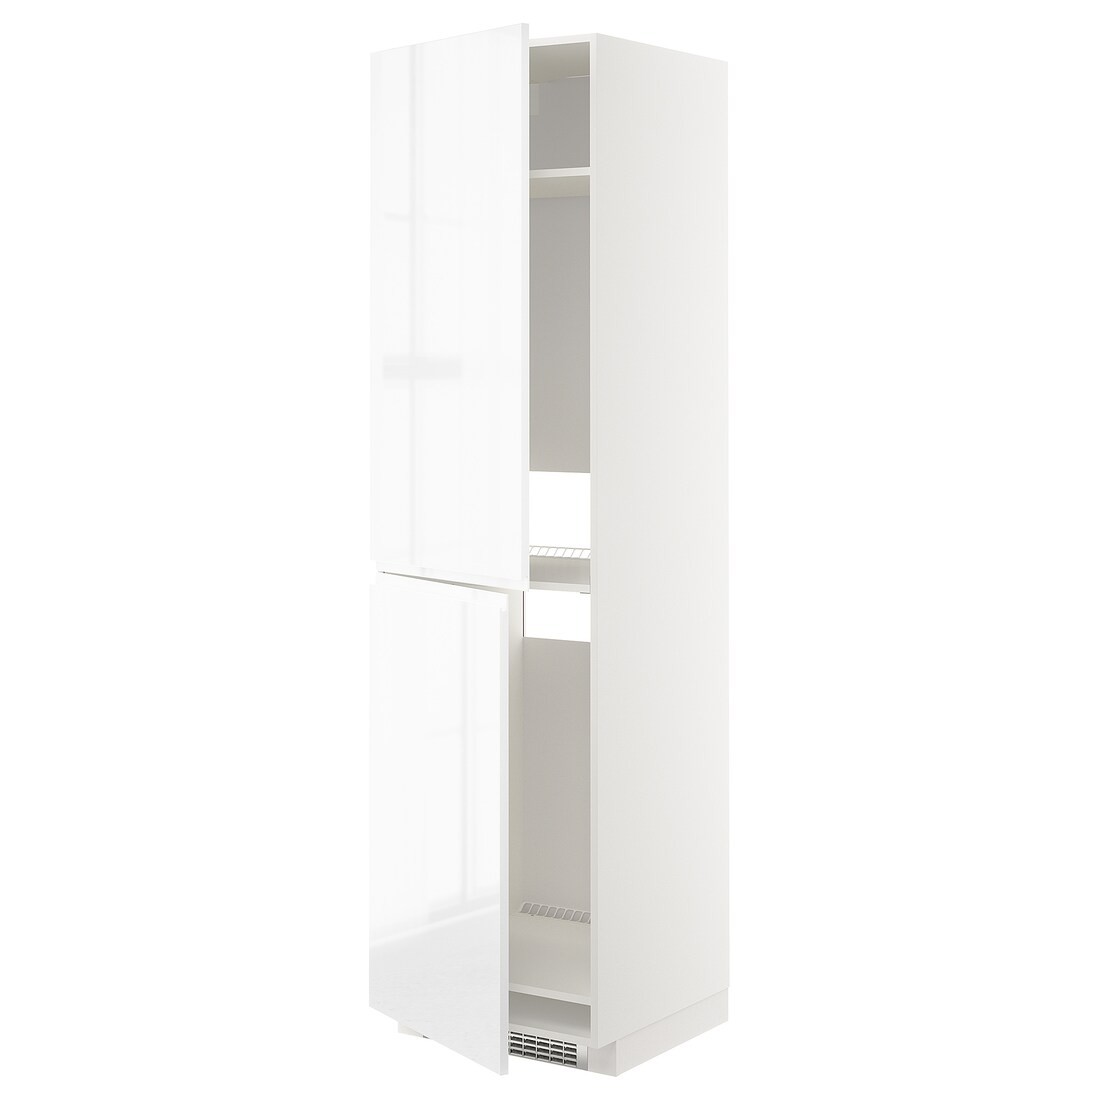 IKEA METOD МЕТОД Высокий шкаф для холодильника / морозильника, белый / Voxtorp глянцевый / белый, 60x60x220 см 39254034 392.540.34